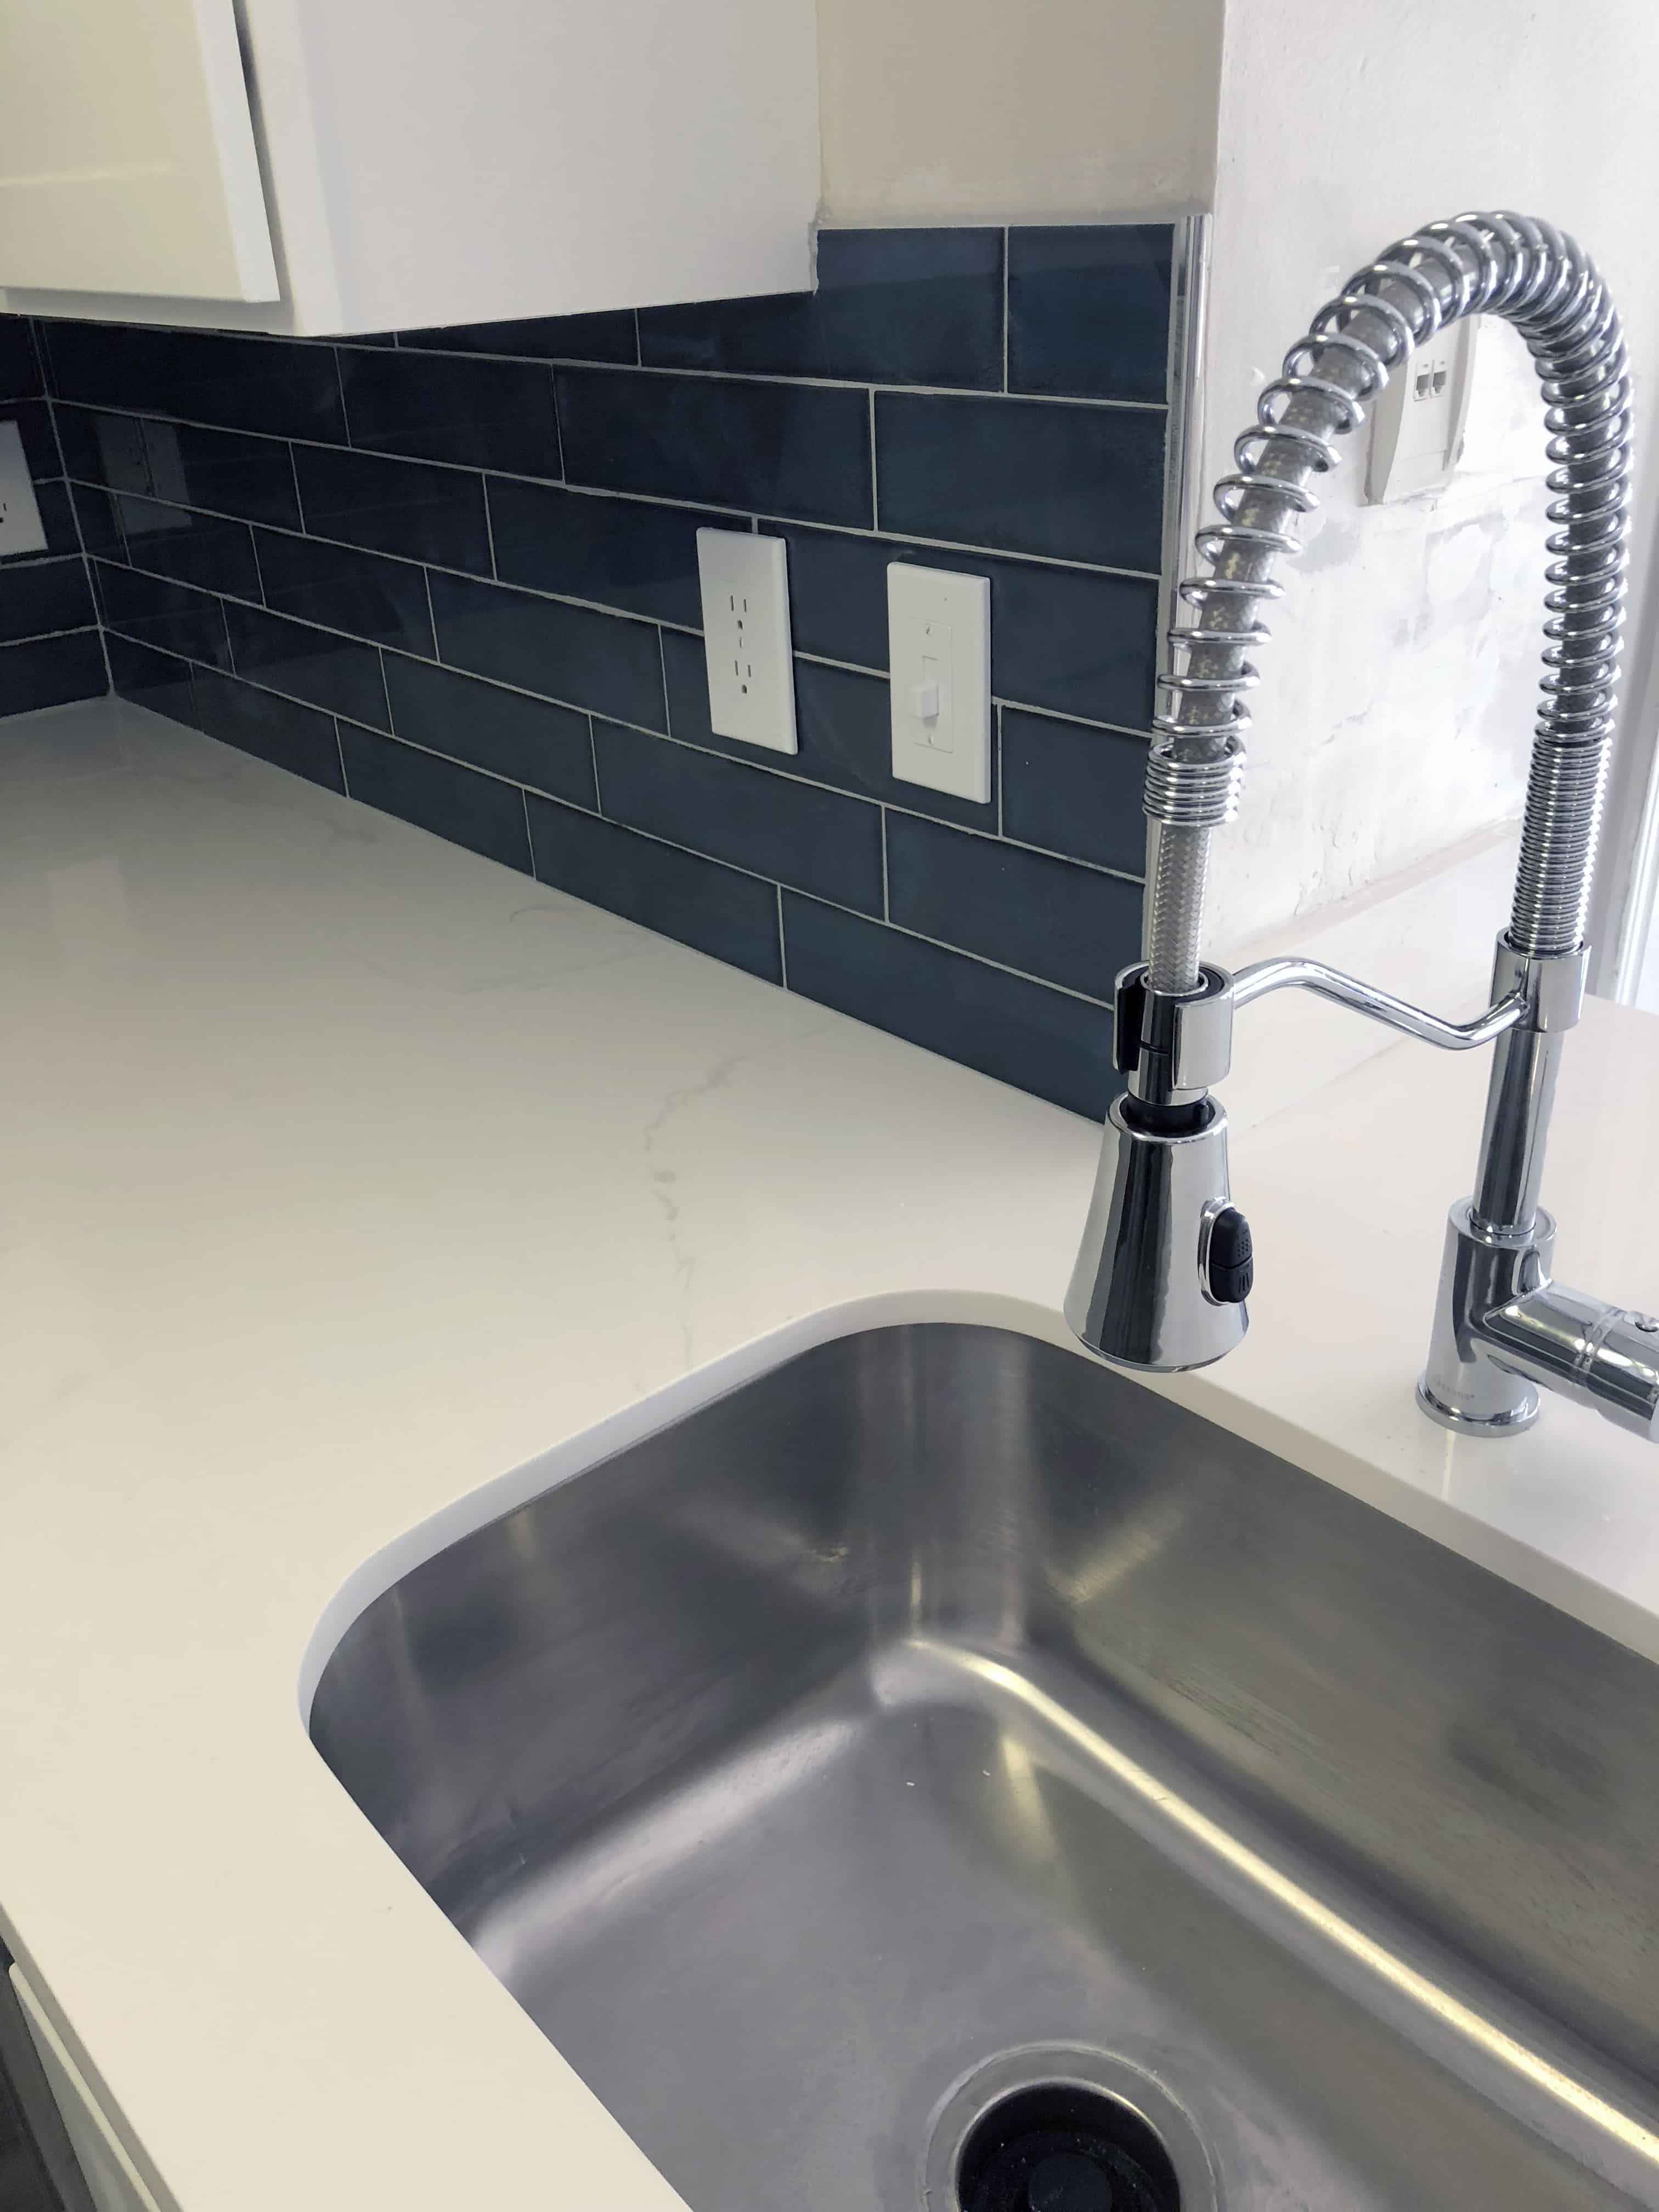 Designer Kitchens with Quartz Countertops, Subway Tile Backsplash and Upgraded Faucet